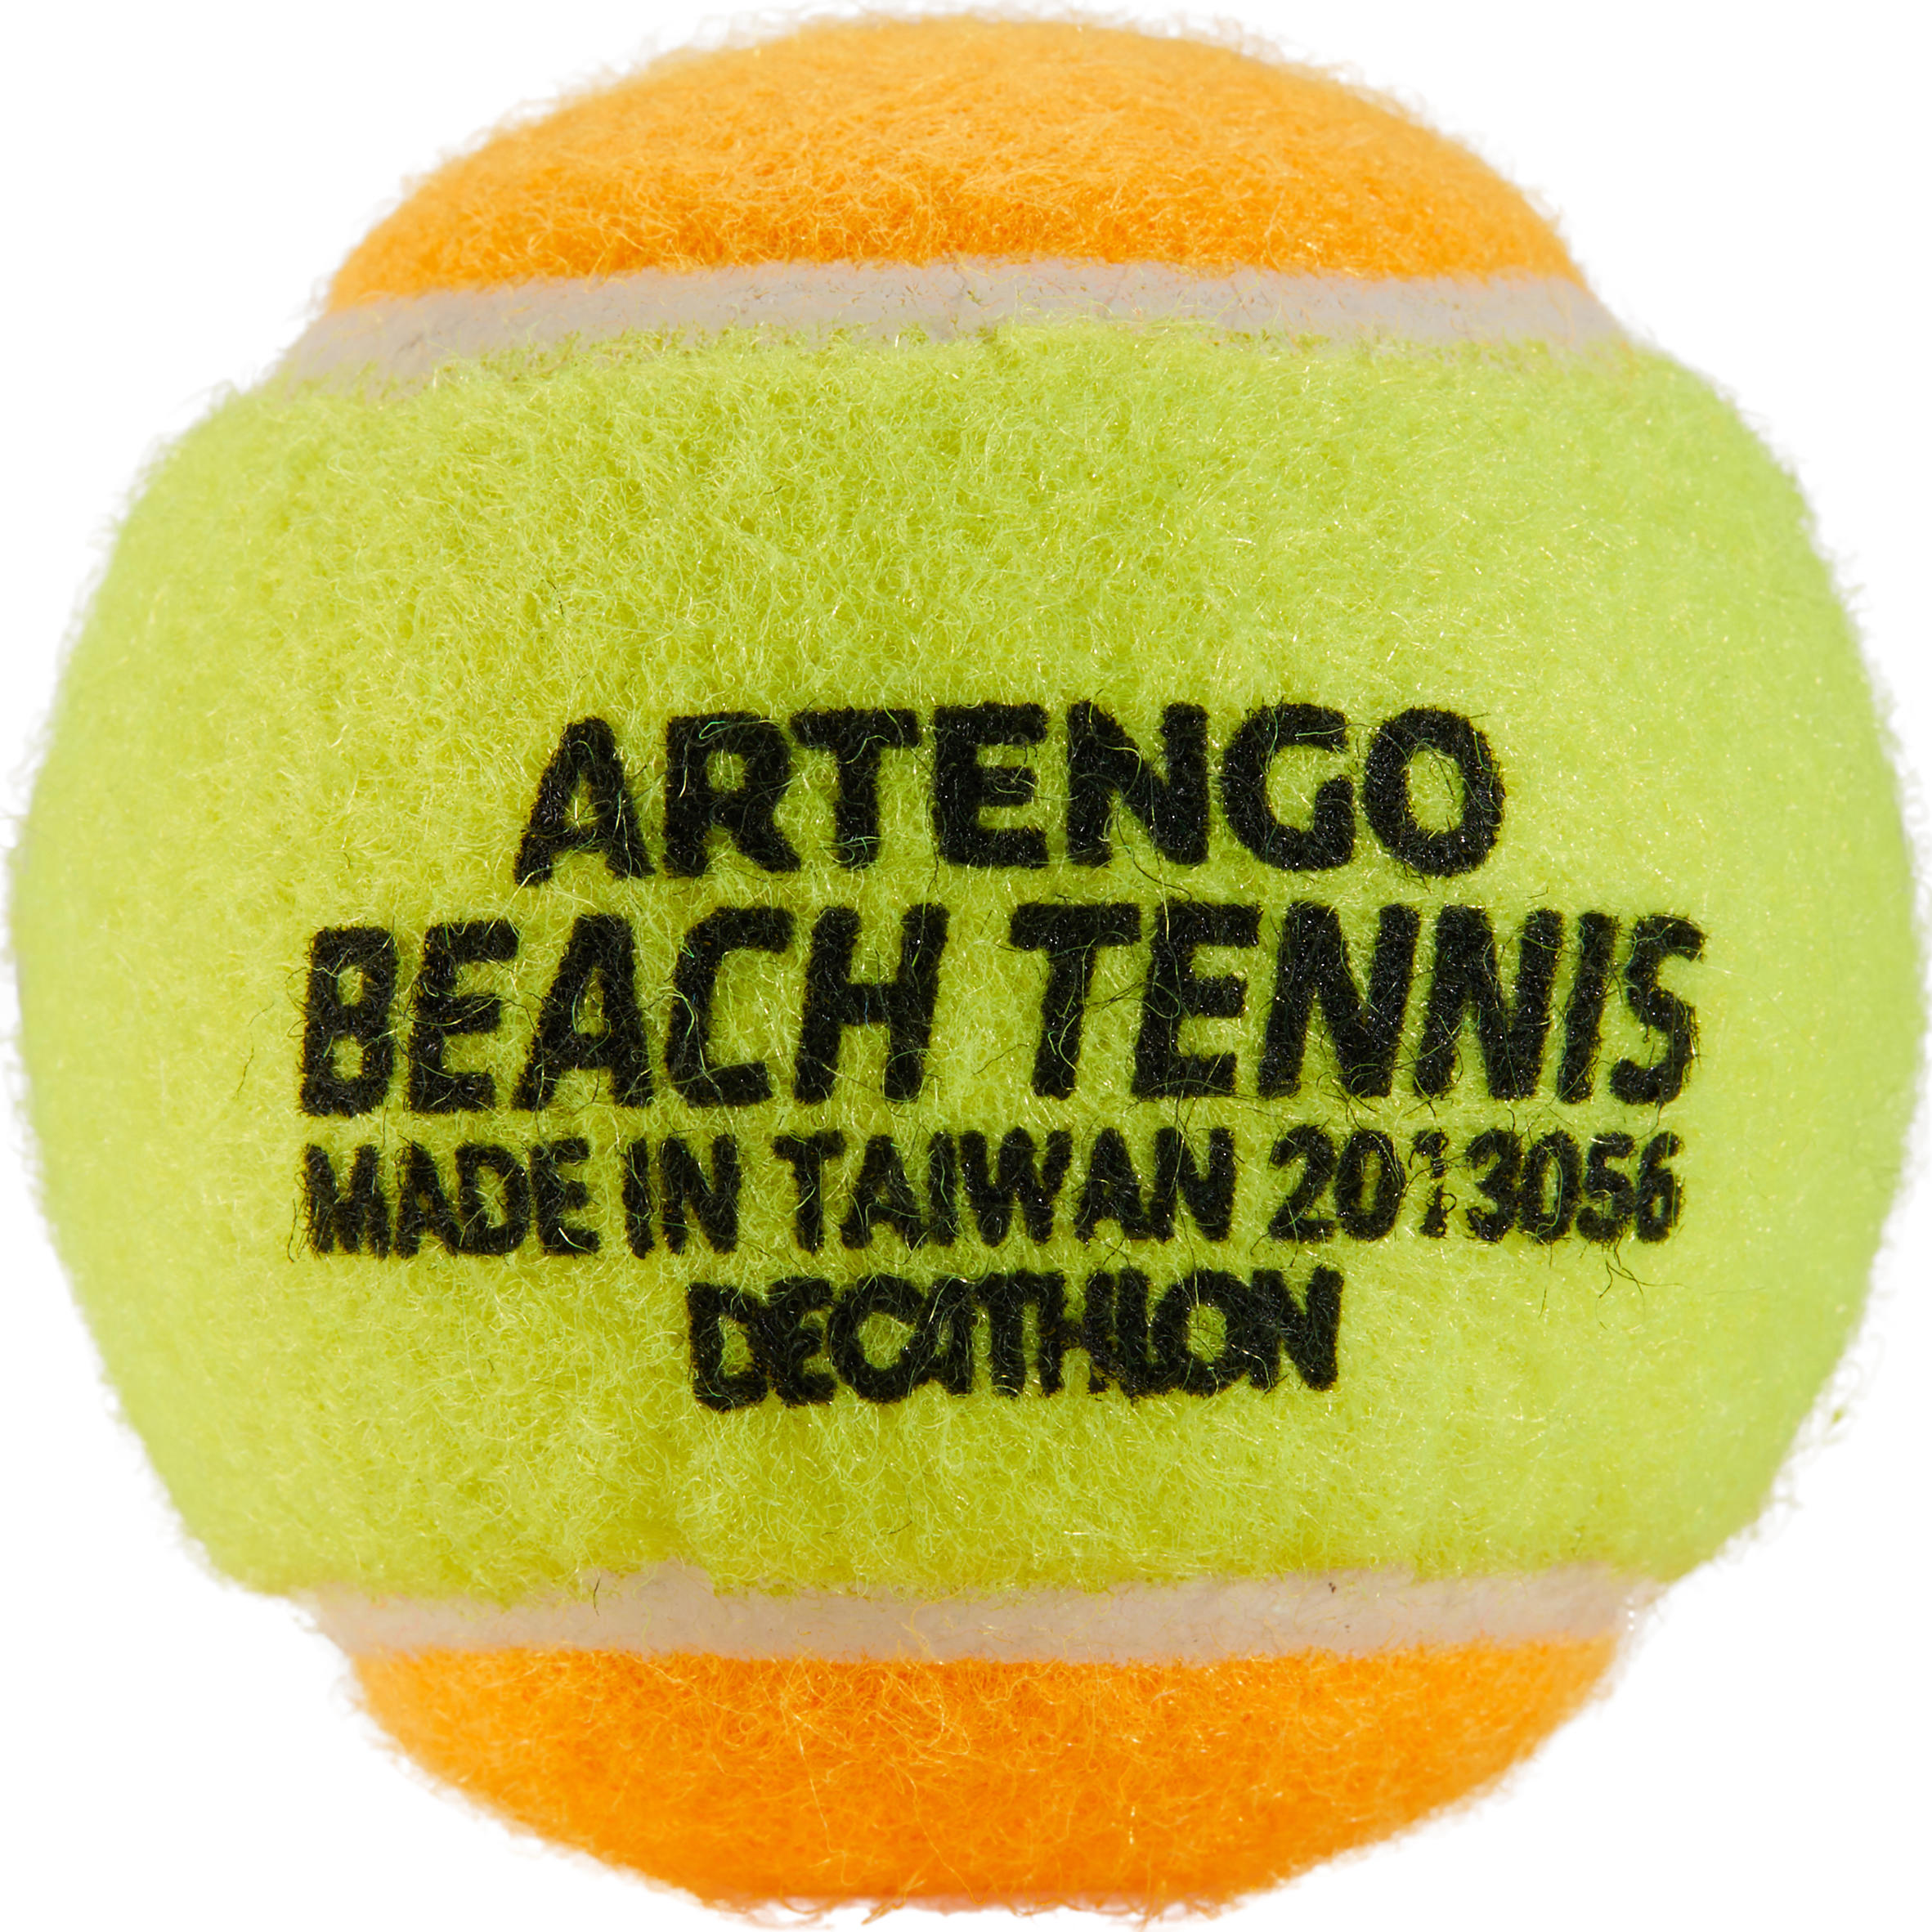 artengo beach tennis